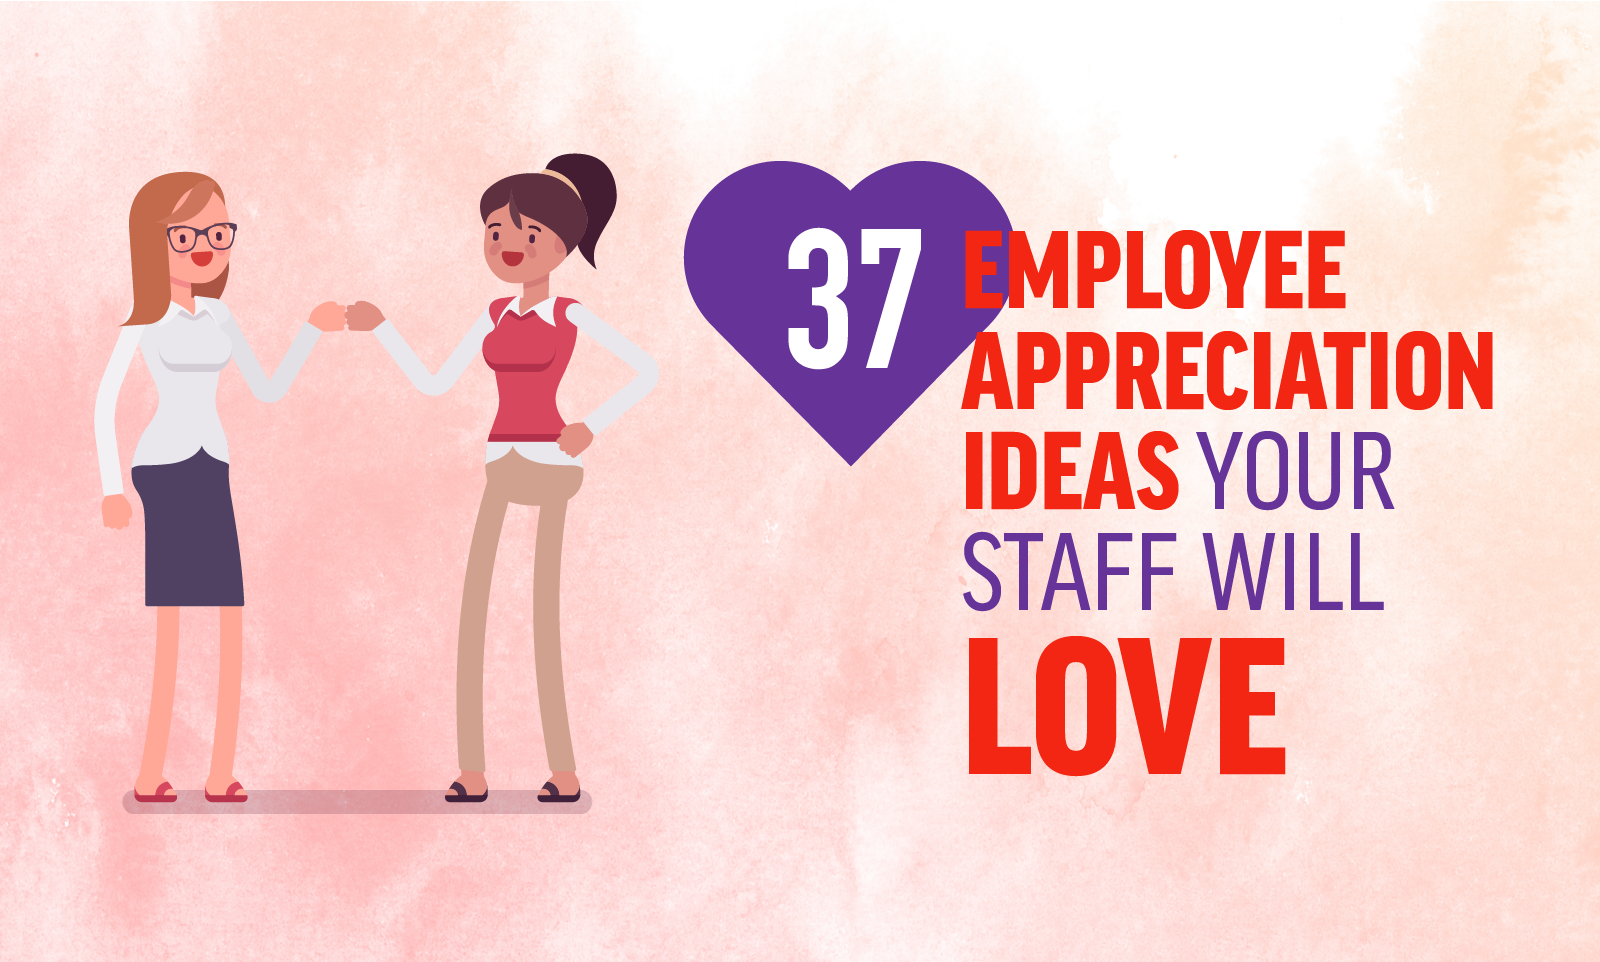 Employee Appreciation Ideas Your Staff